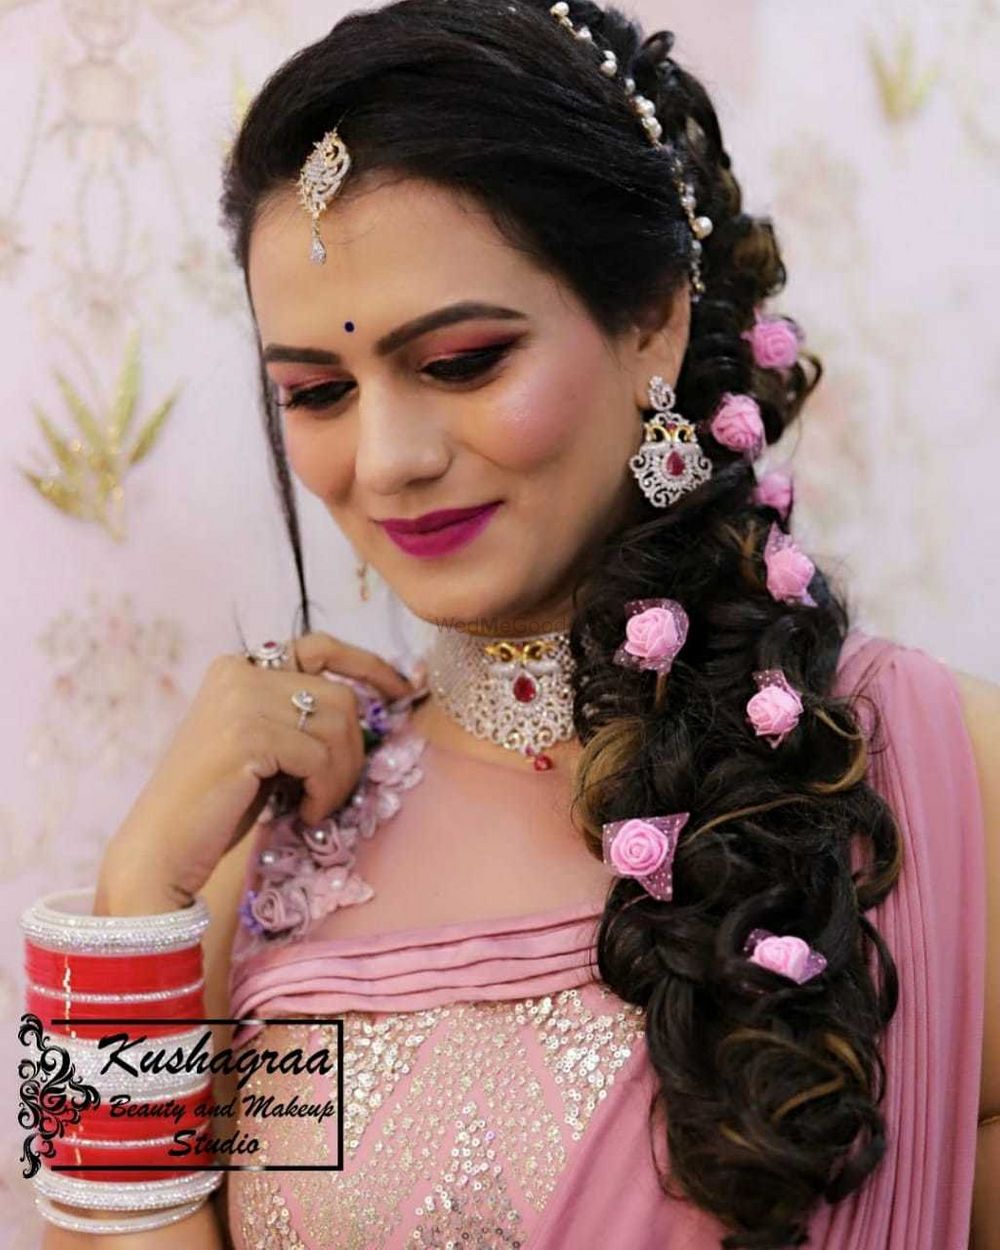 Photo By Kushagraa Beauty and Makeup Studio - Bridal Makeup